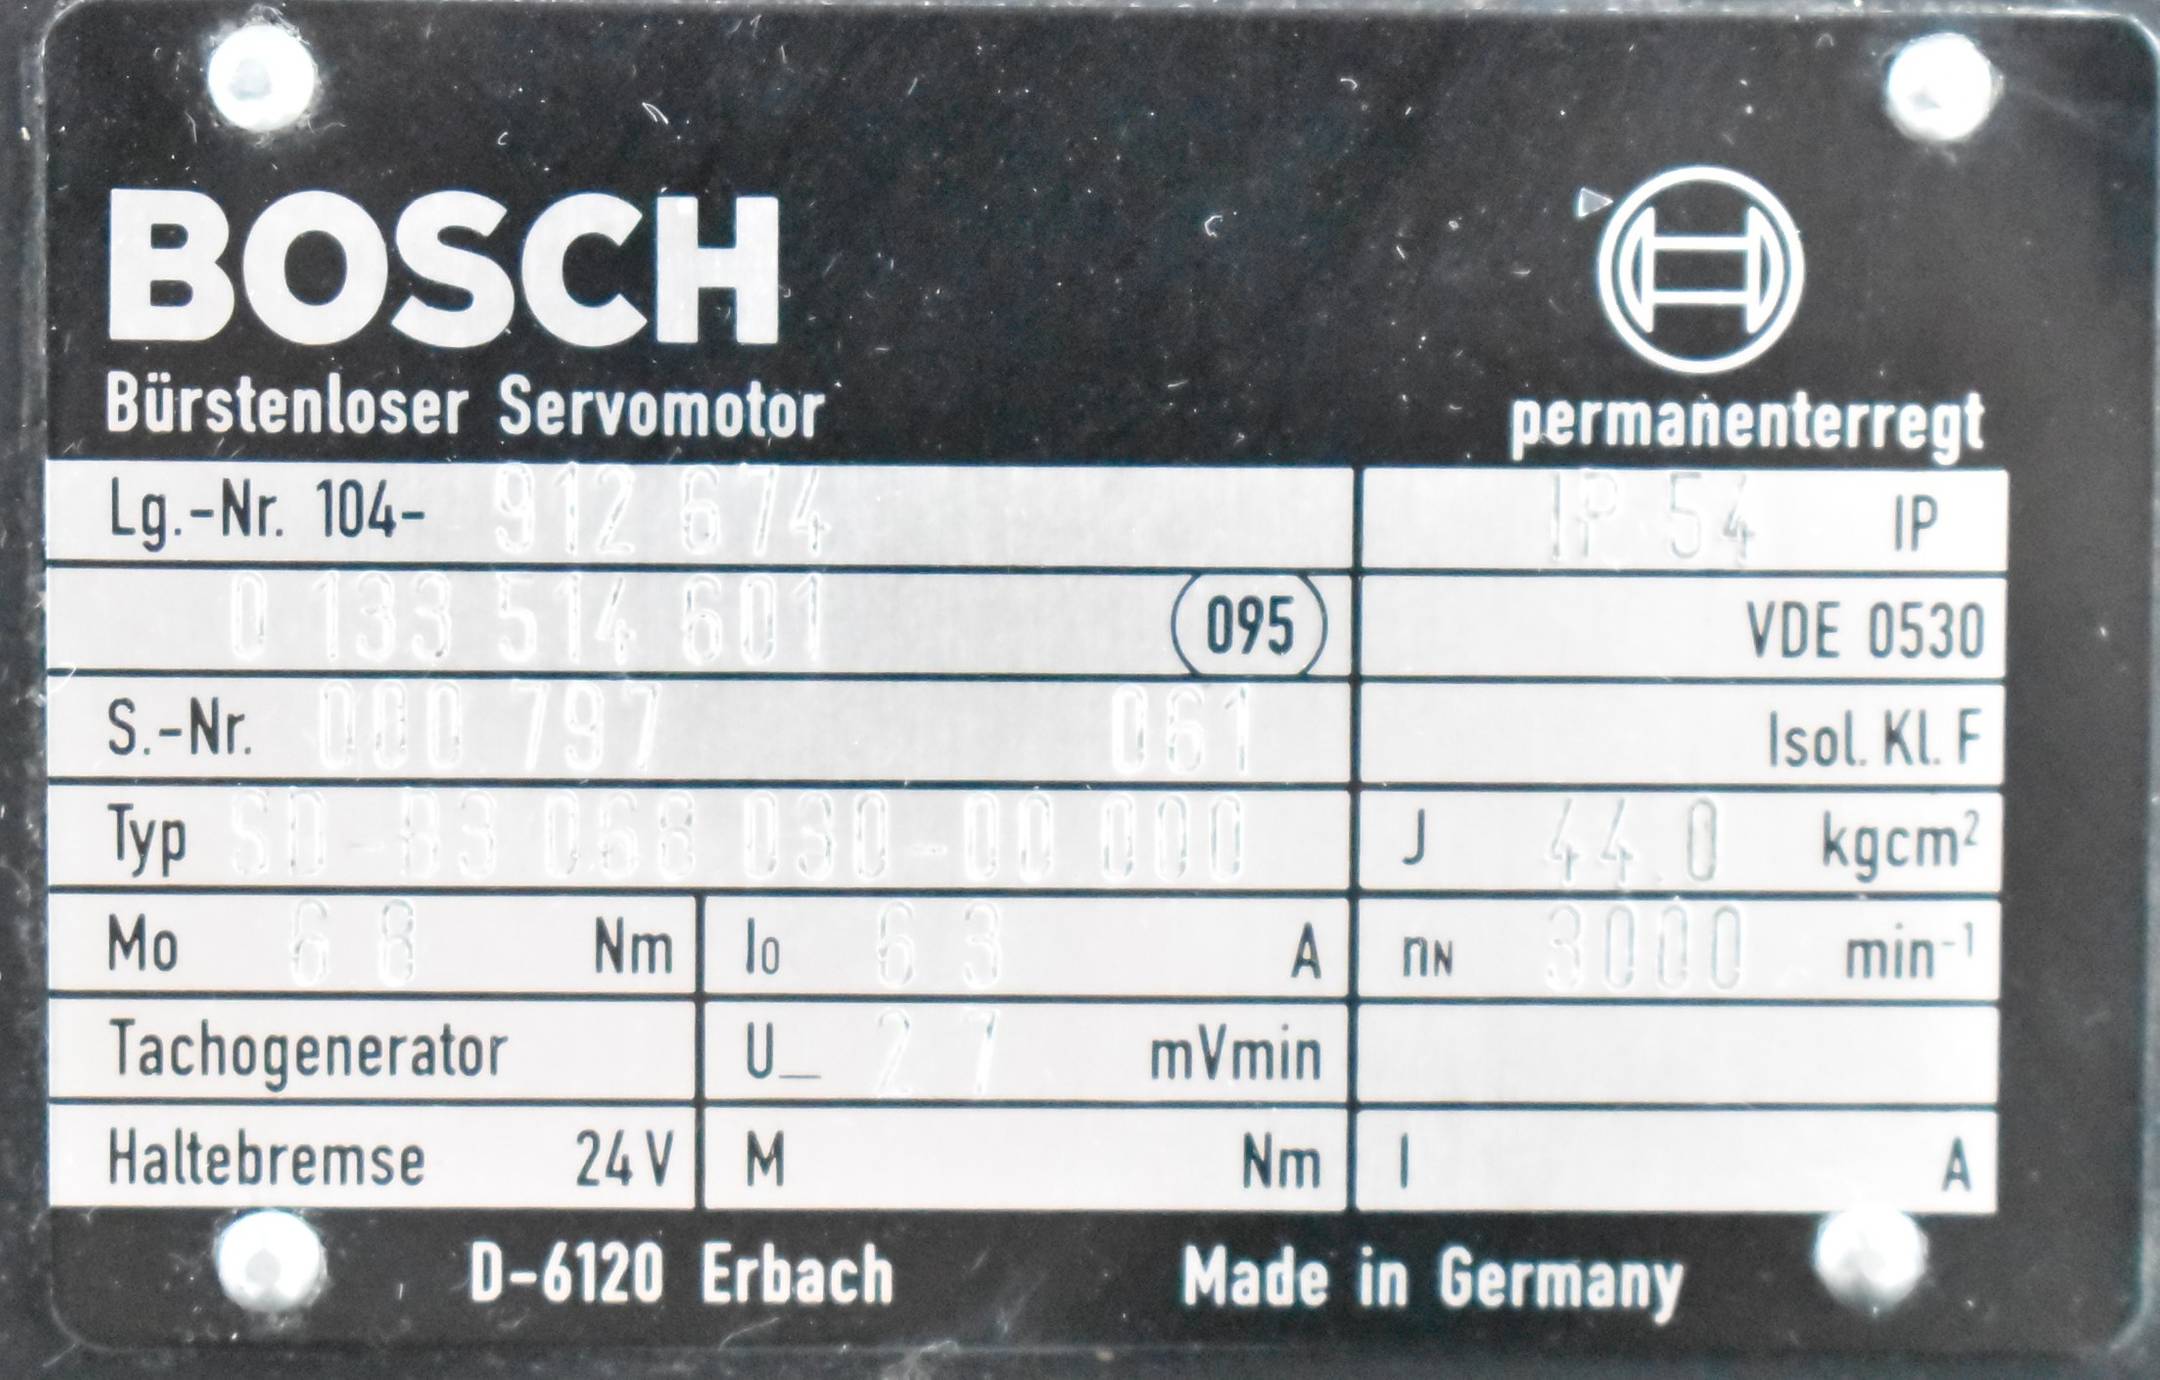 Bosch Servomotor 6,8Nm 6,3A 3000rpm 2,7mV/min SD-B3.068.030-00.000 